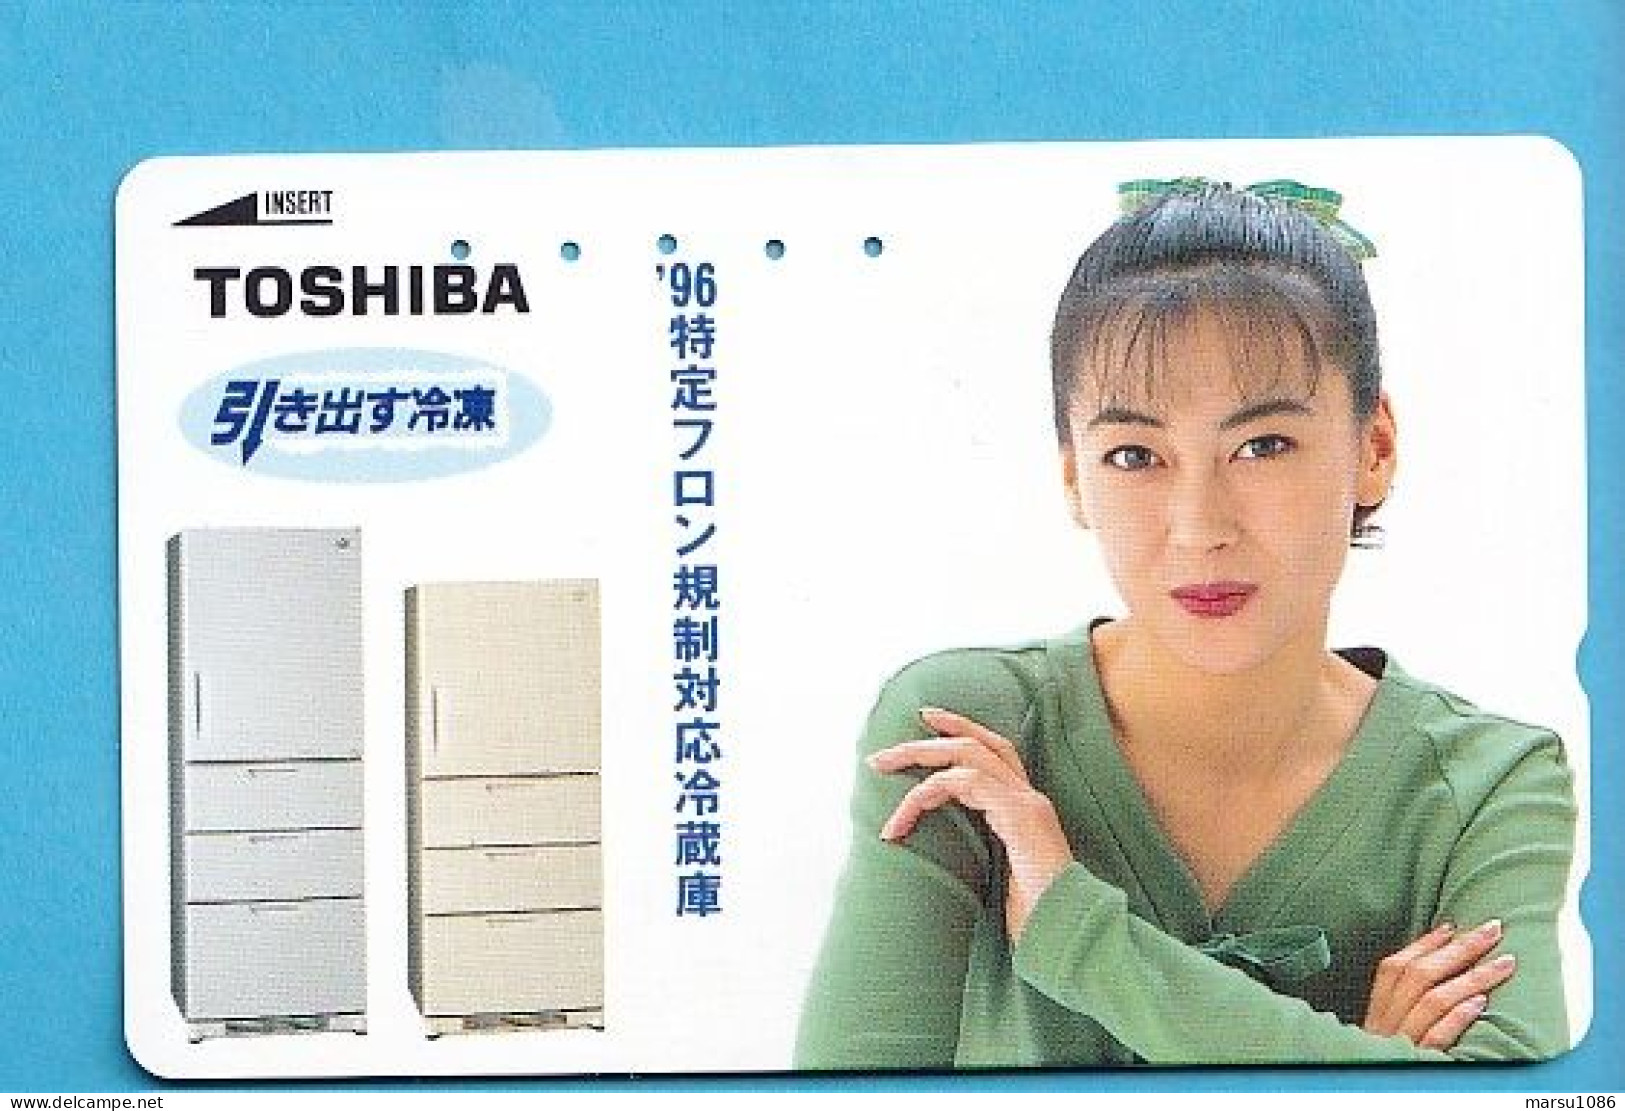 Japan Telefonkarte Japon Télécarte Phonecard -  Girl Frau Women Femme Toshiba - Advertising